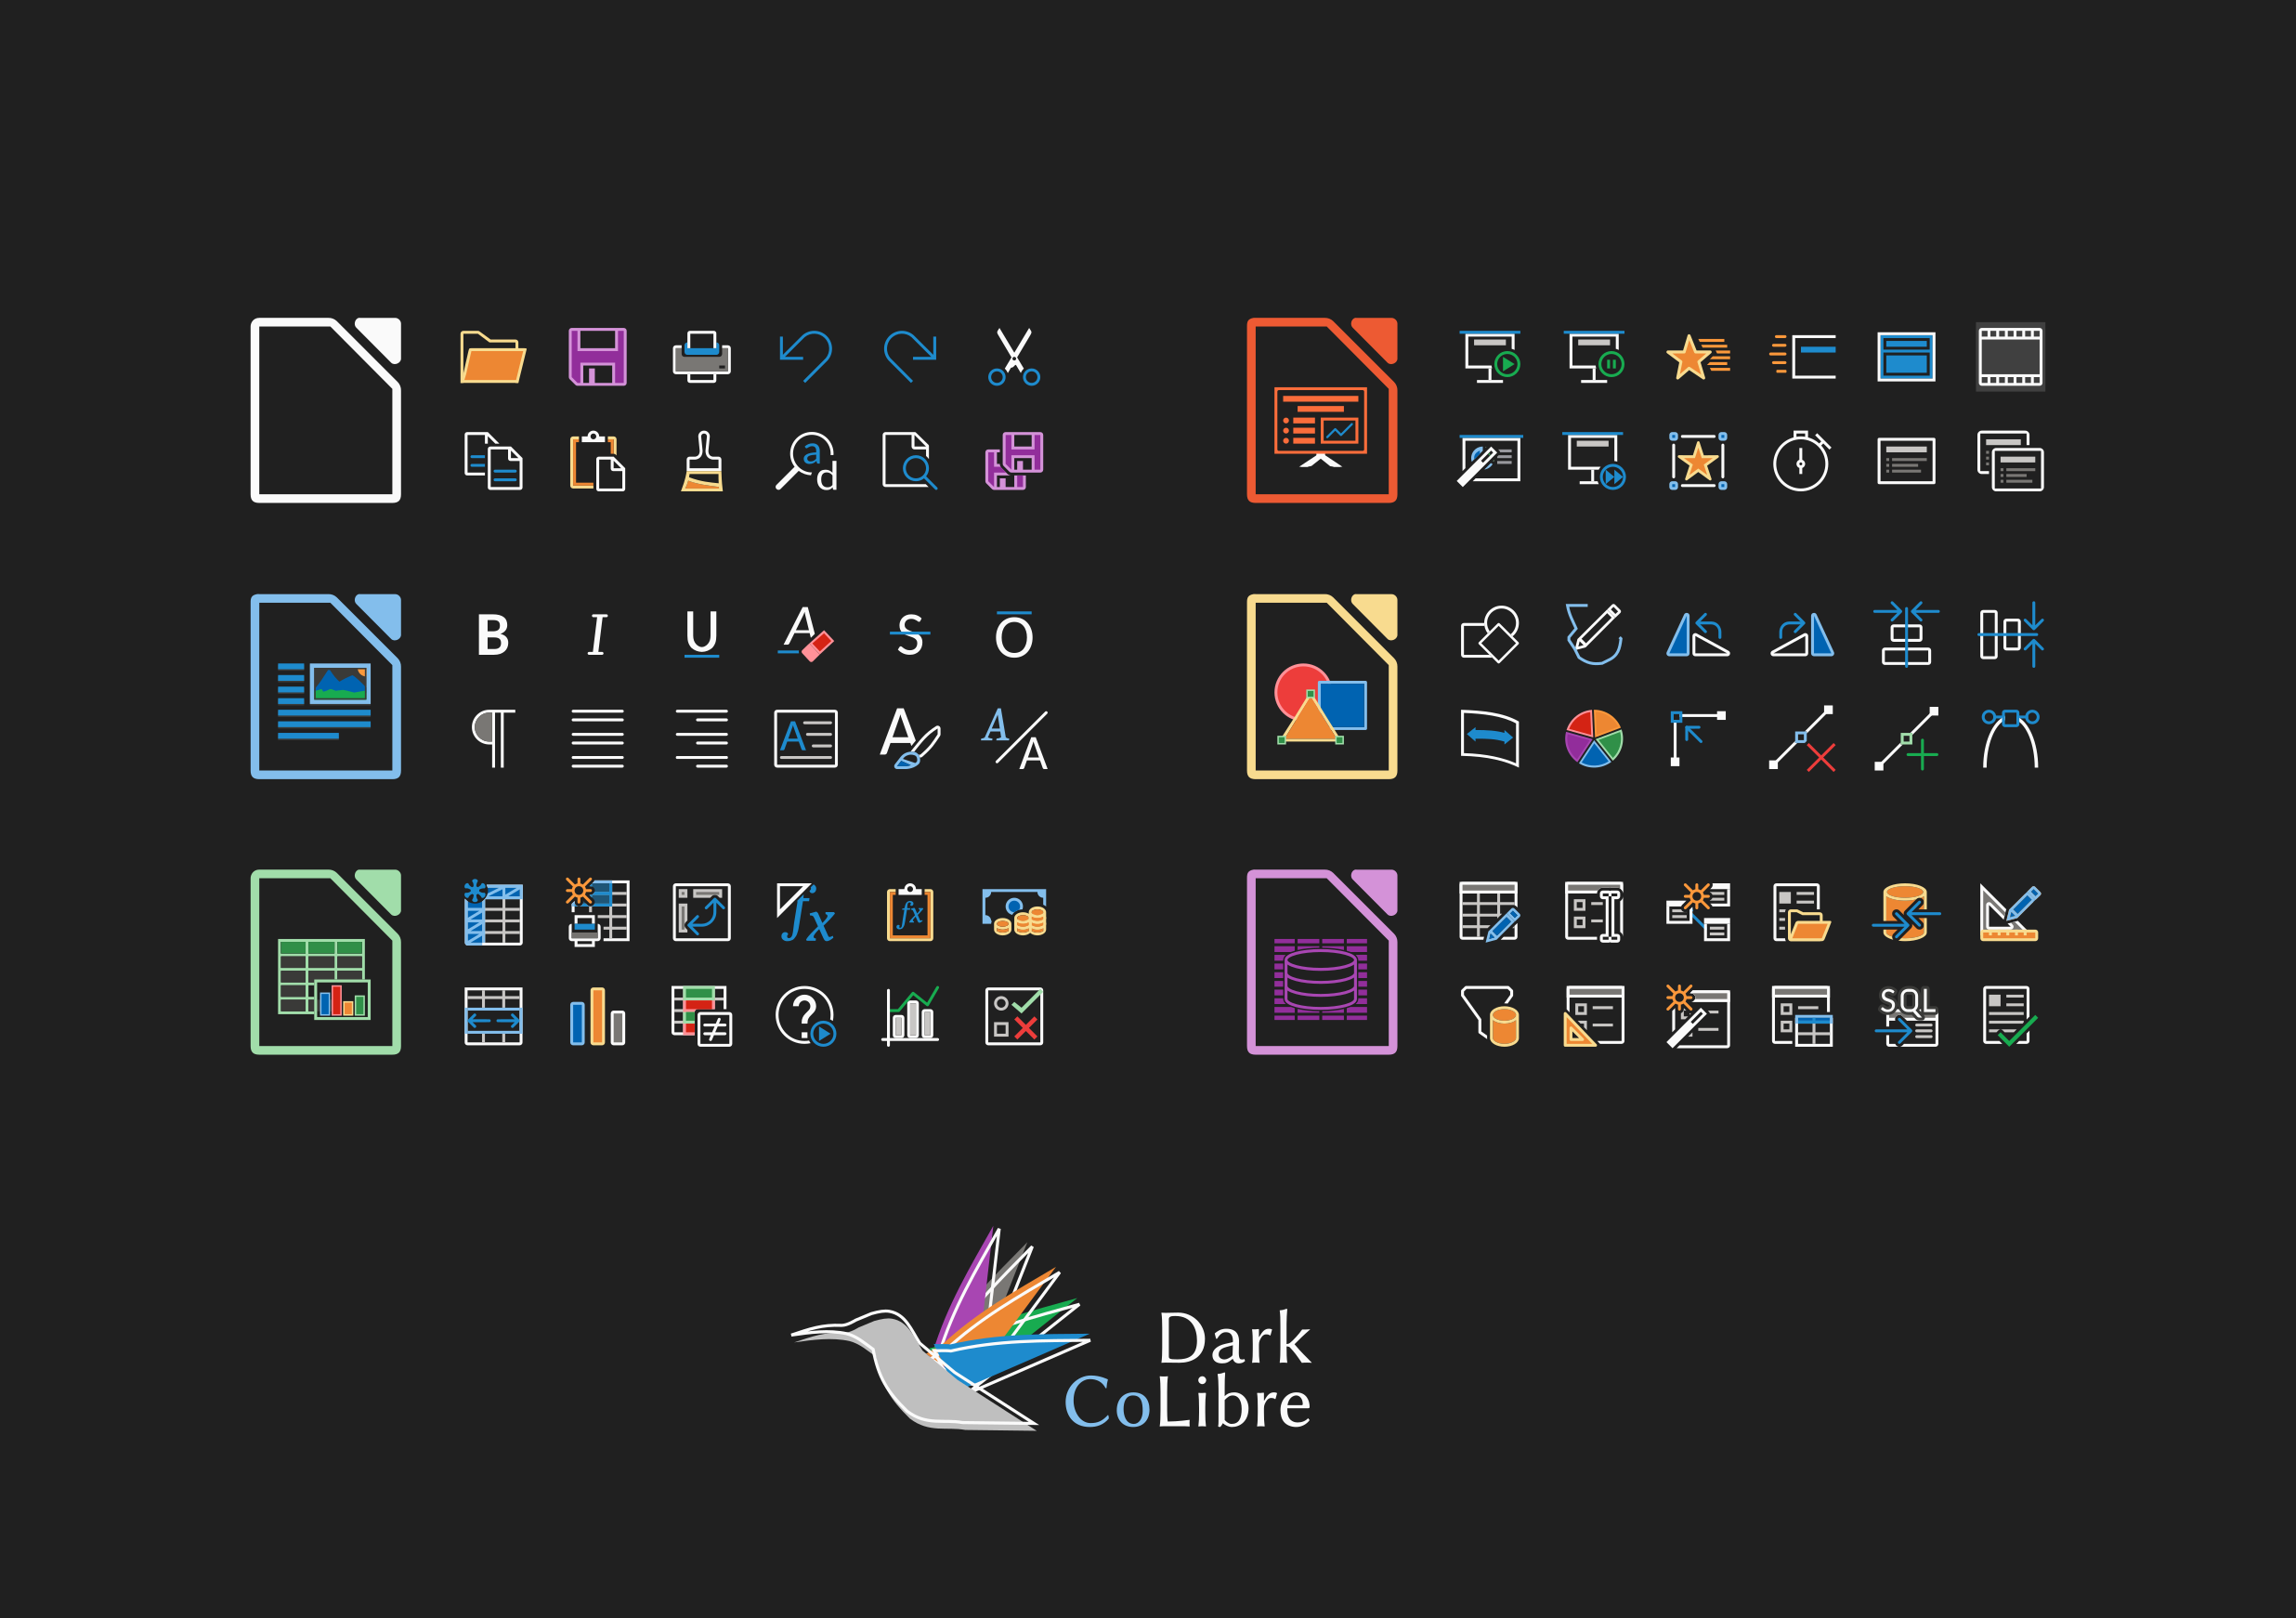 LibreOffice icons